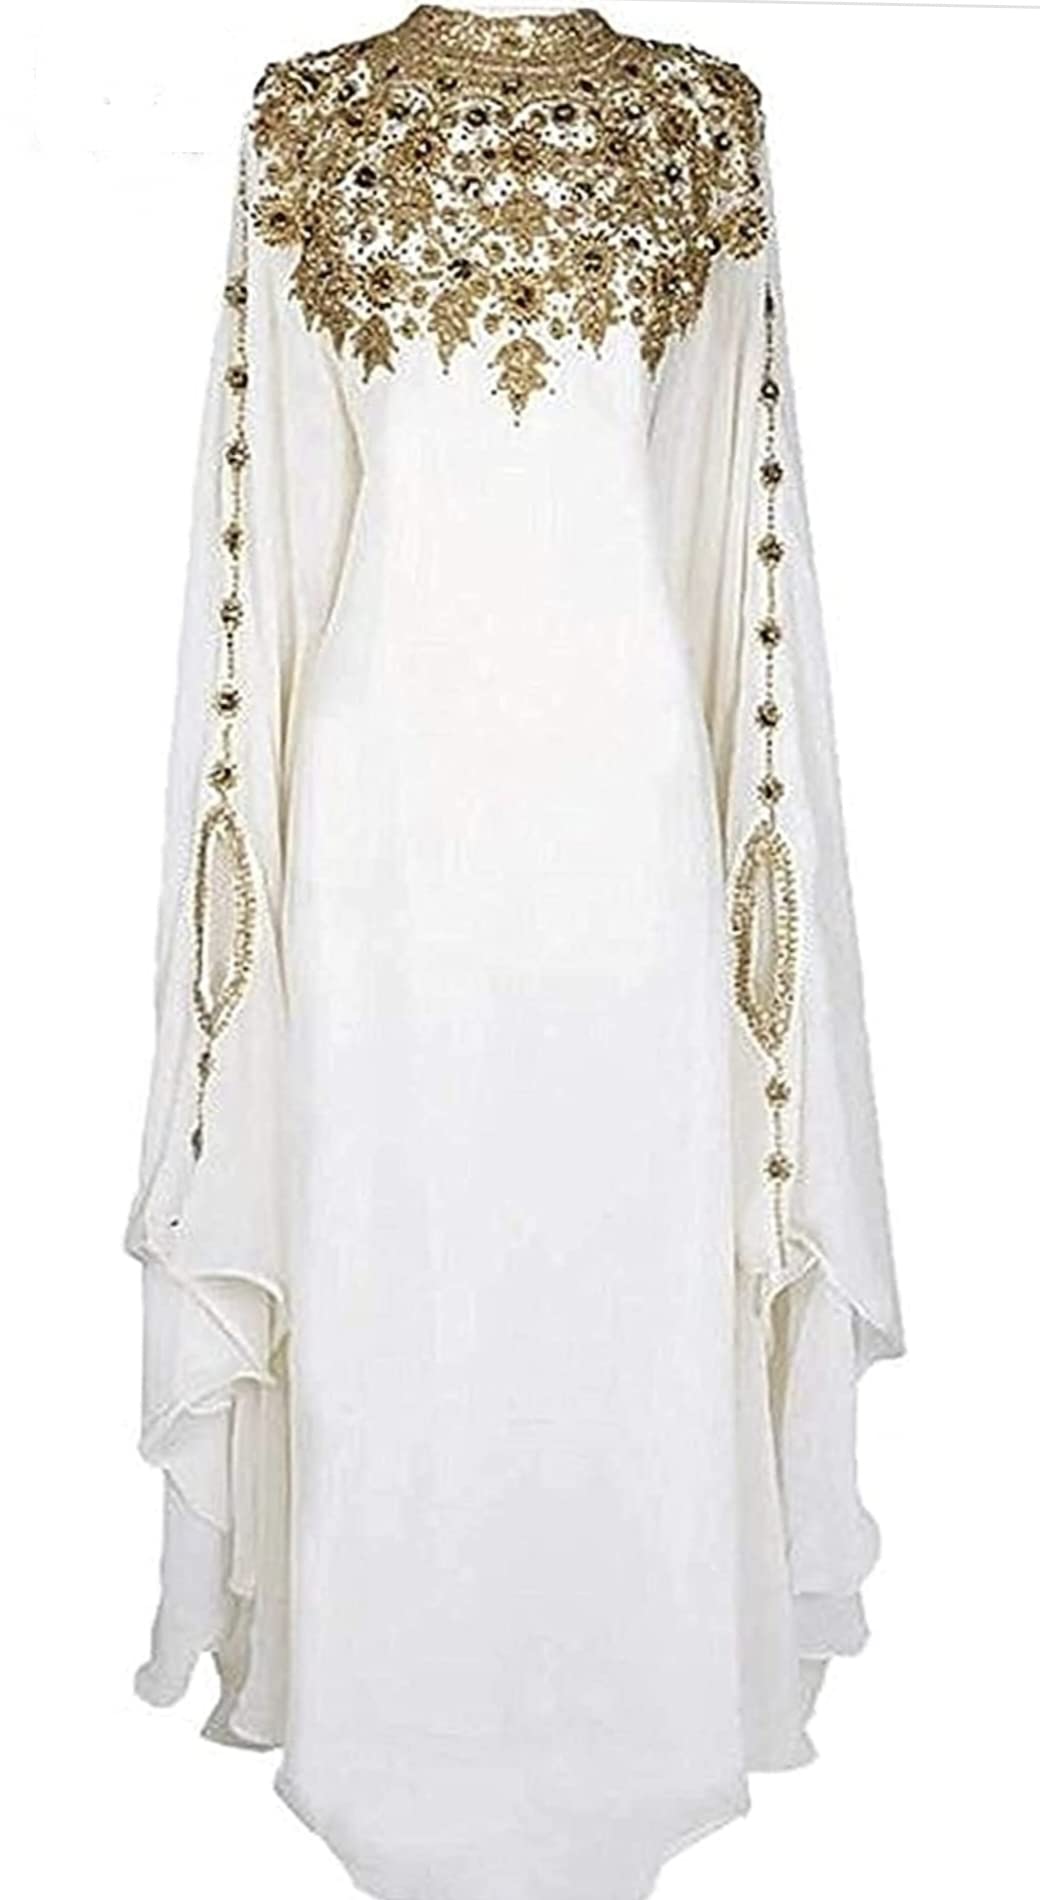 CREATI New Moroccan Dubai Kaftans Farasha Abaya Dress Very Fancy Long Gown Dress (Large), White